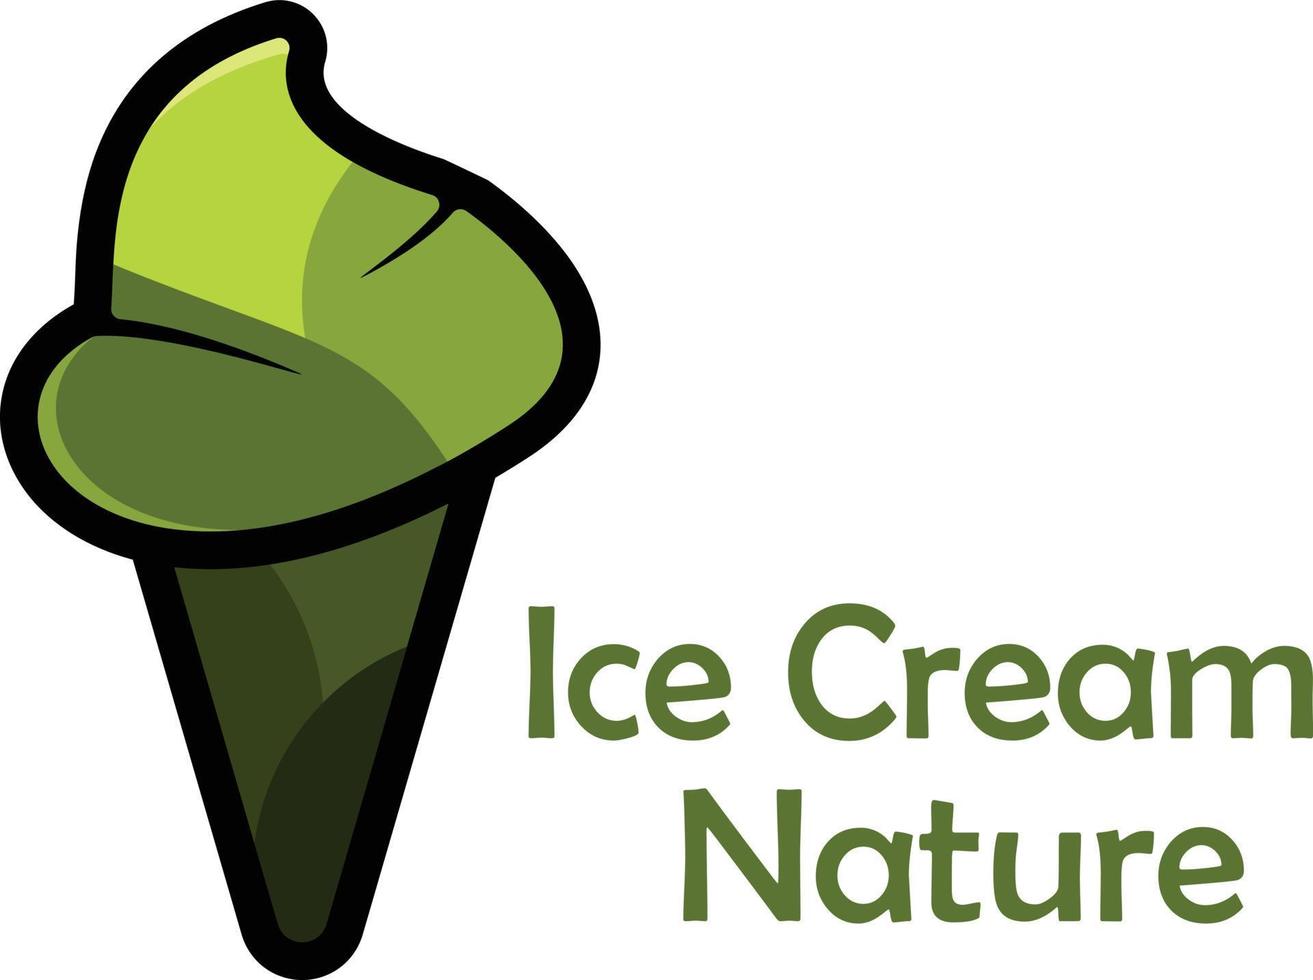 ice cream logo nature. vector illustration